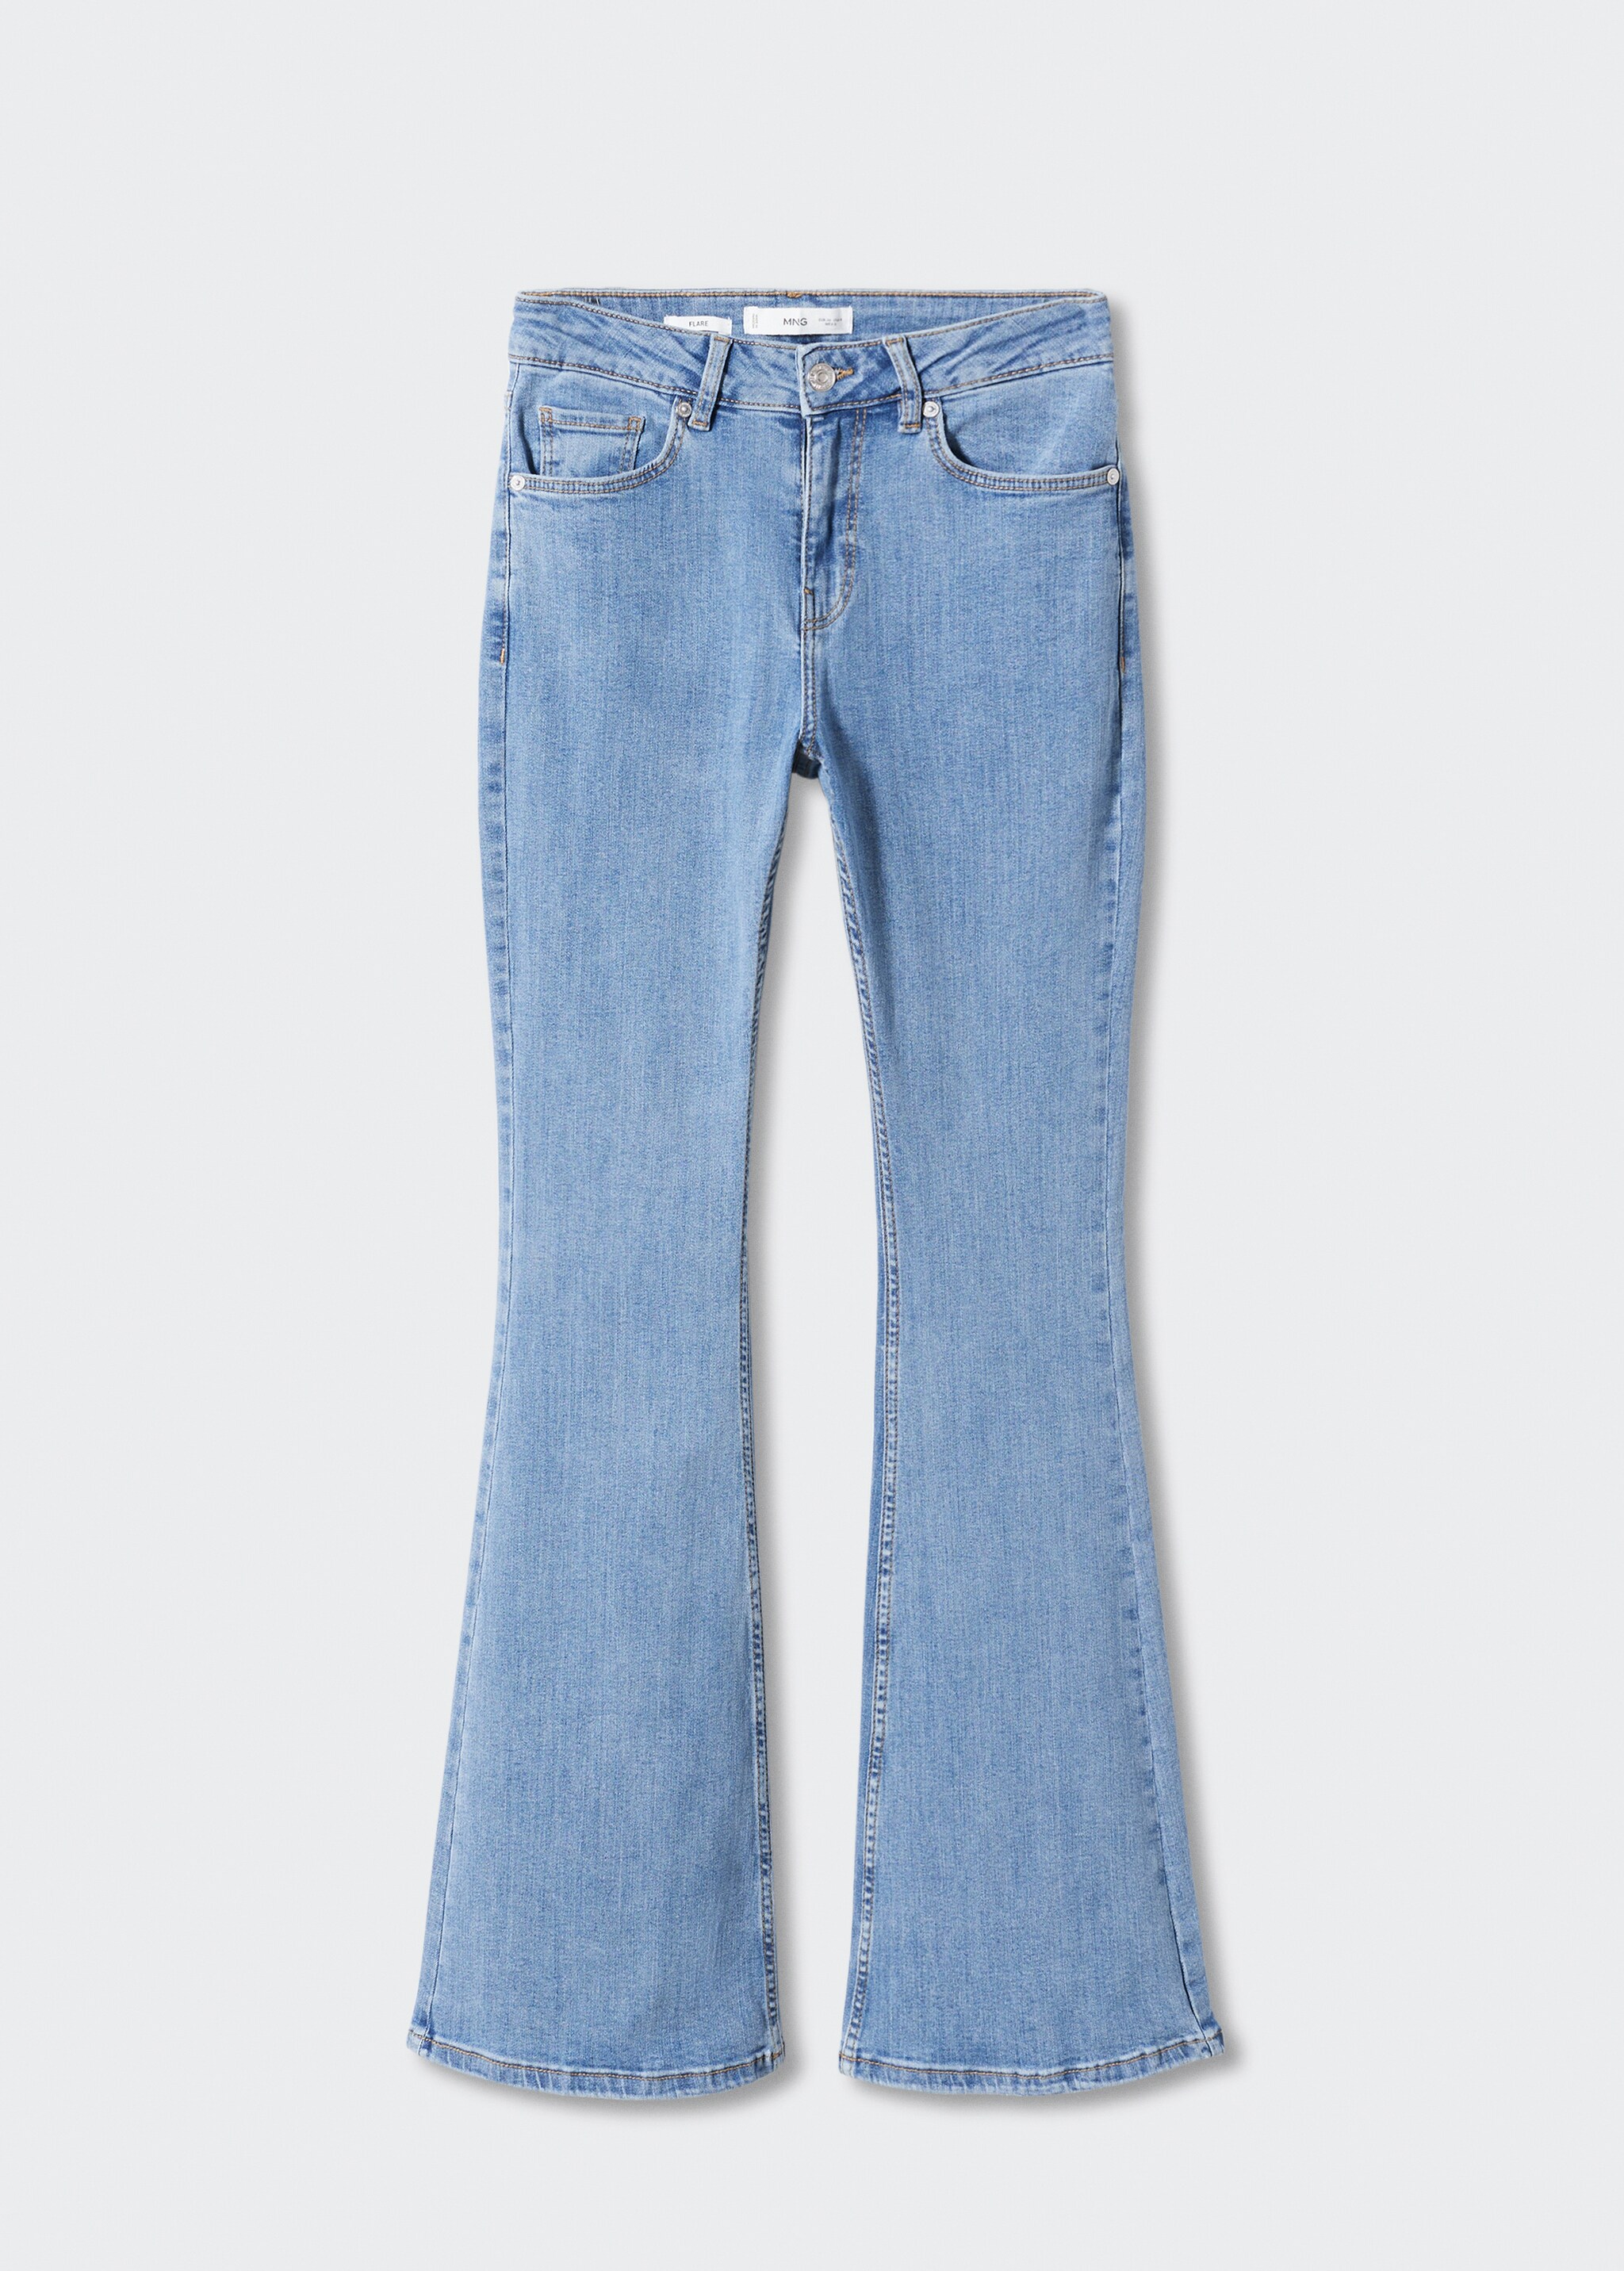 Jeans flare tiro medio - Artículo sin modelo